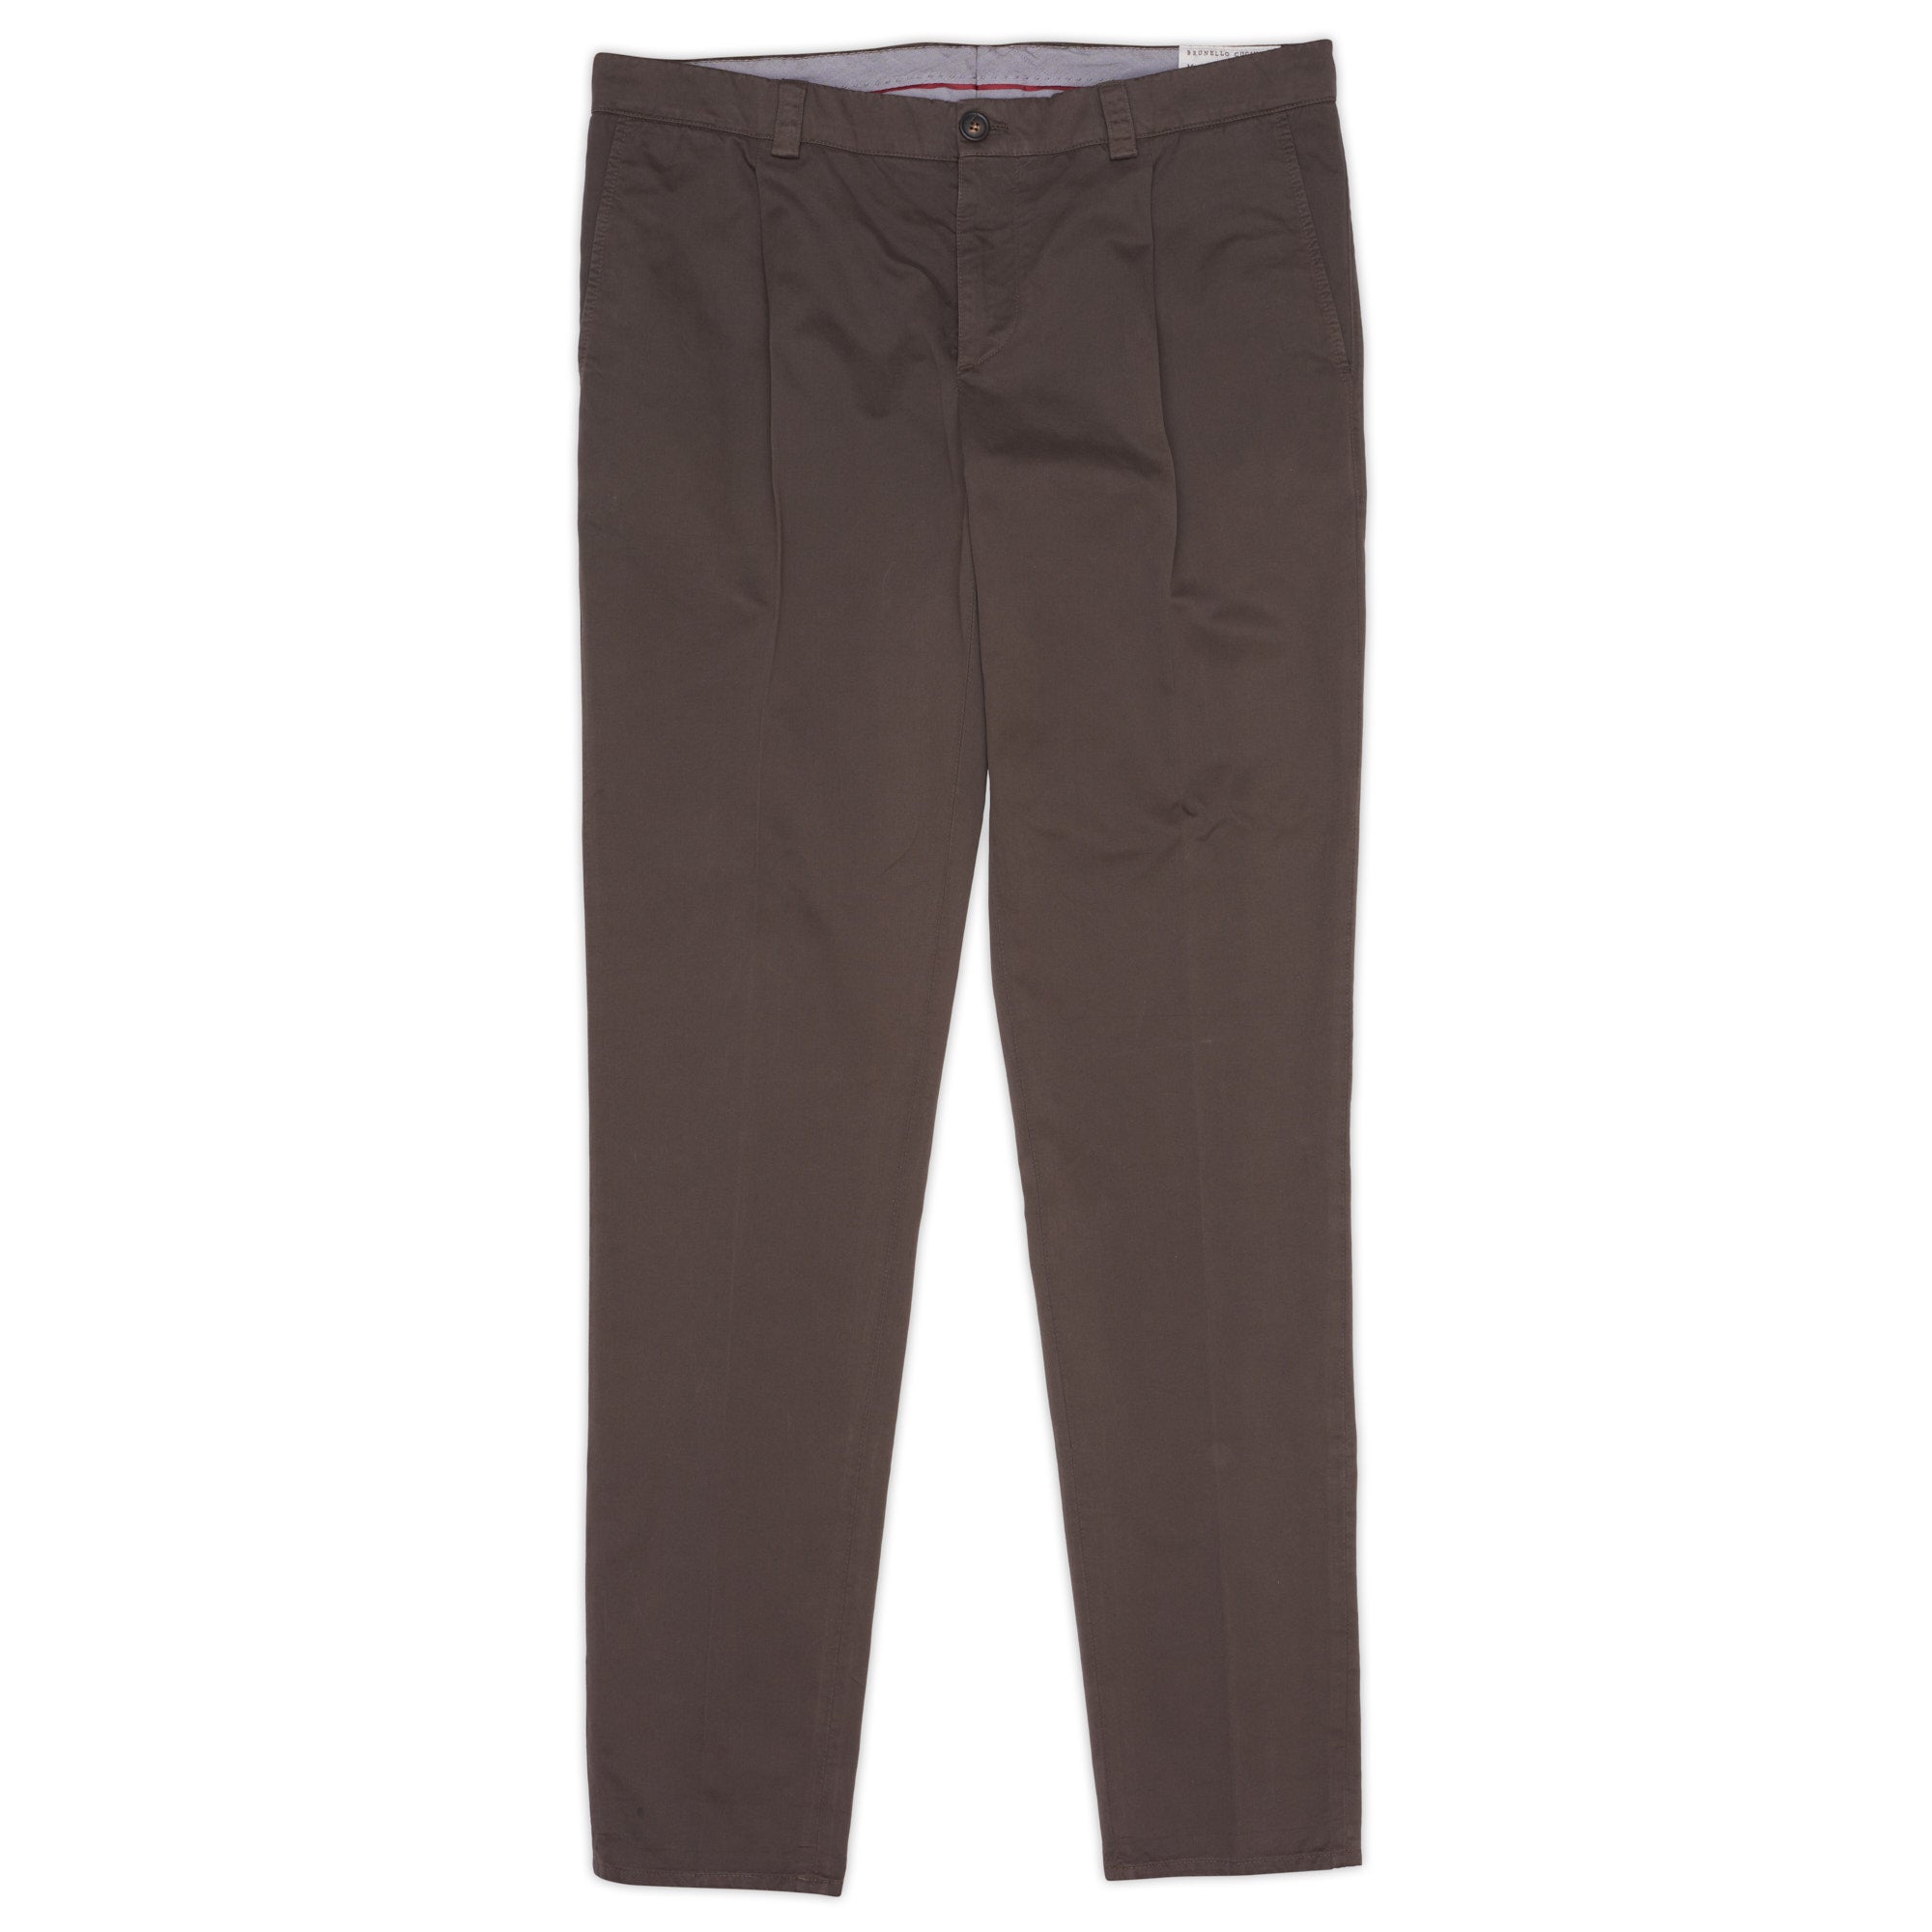 BRUNELLO CUCINELLI Brown Twill Cotton Single Pleated Pants EU 54 US 38 Slim Fit